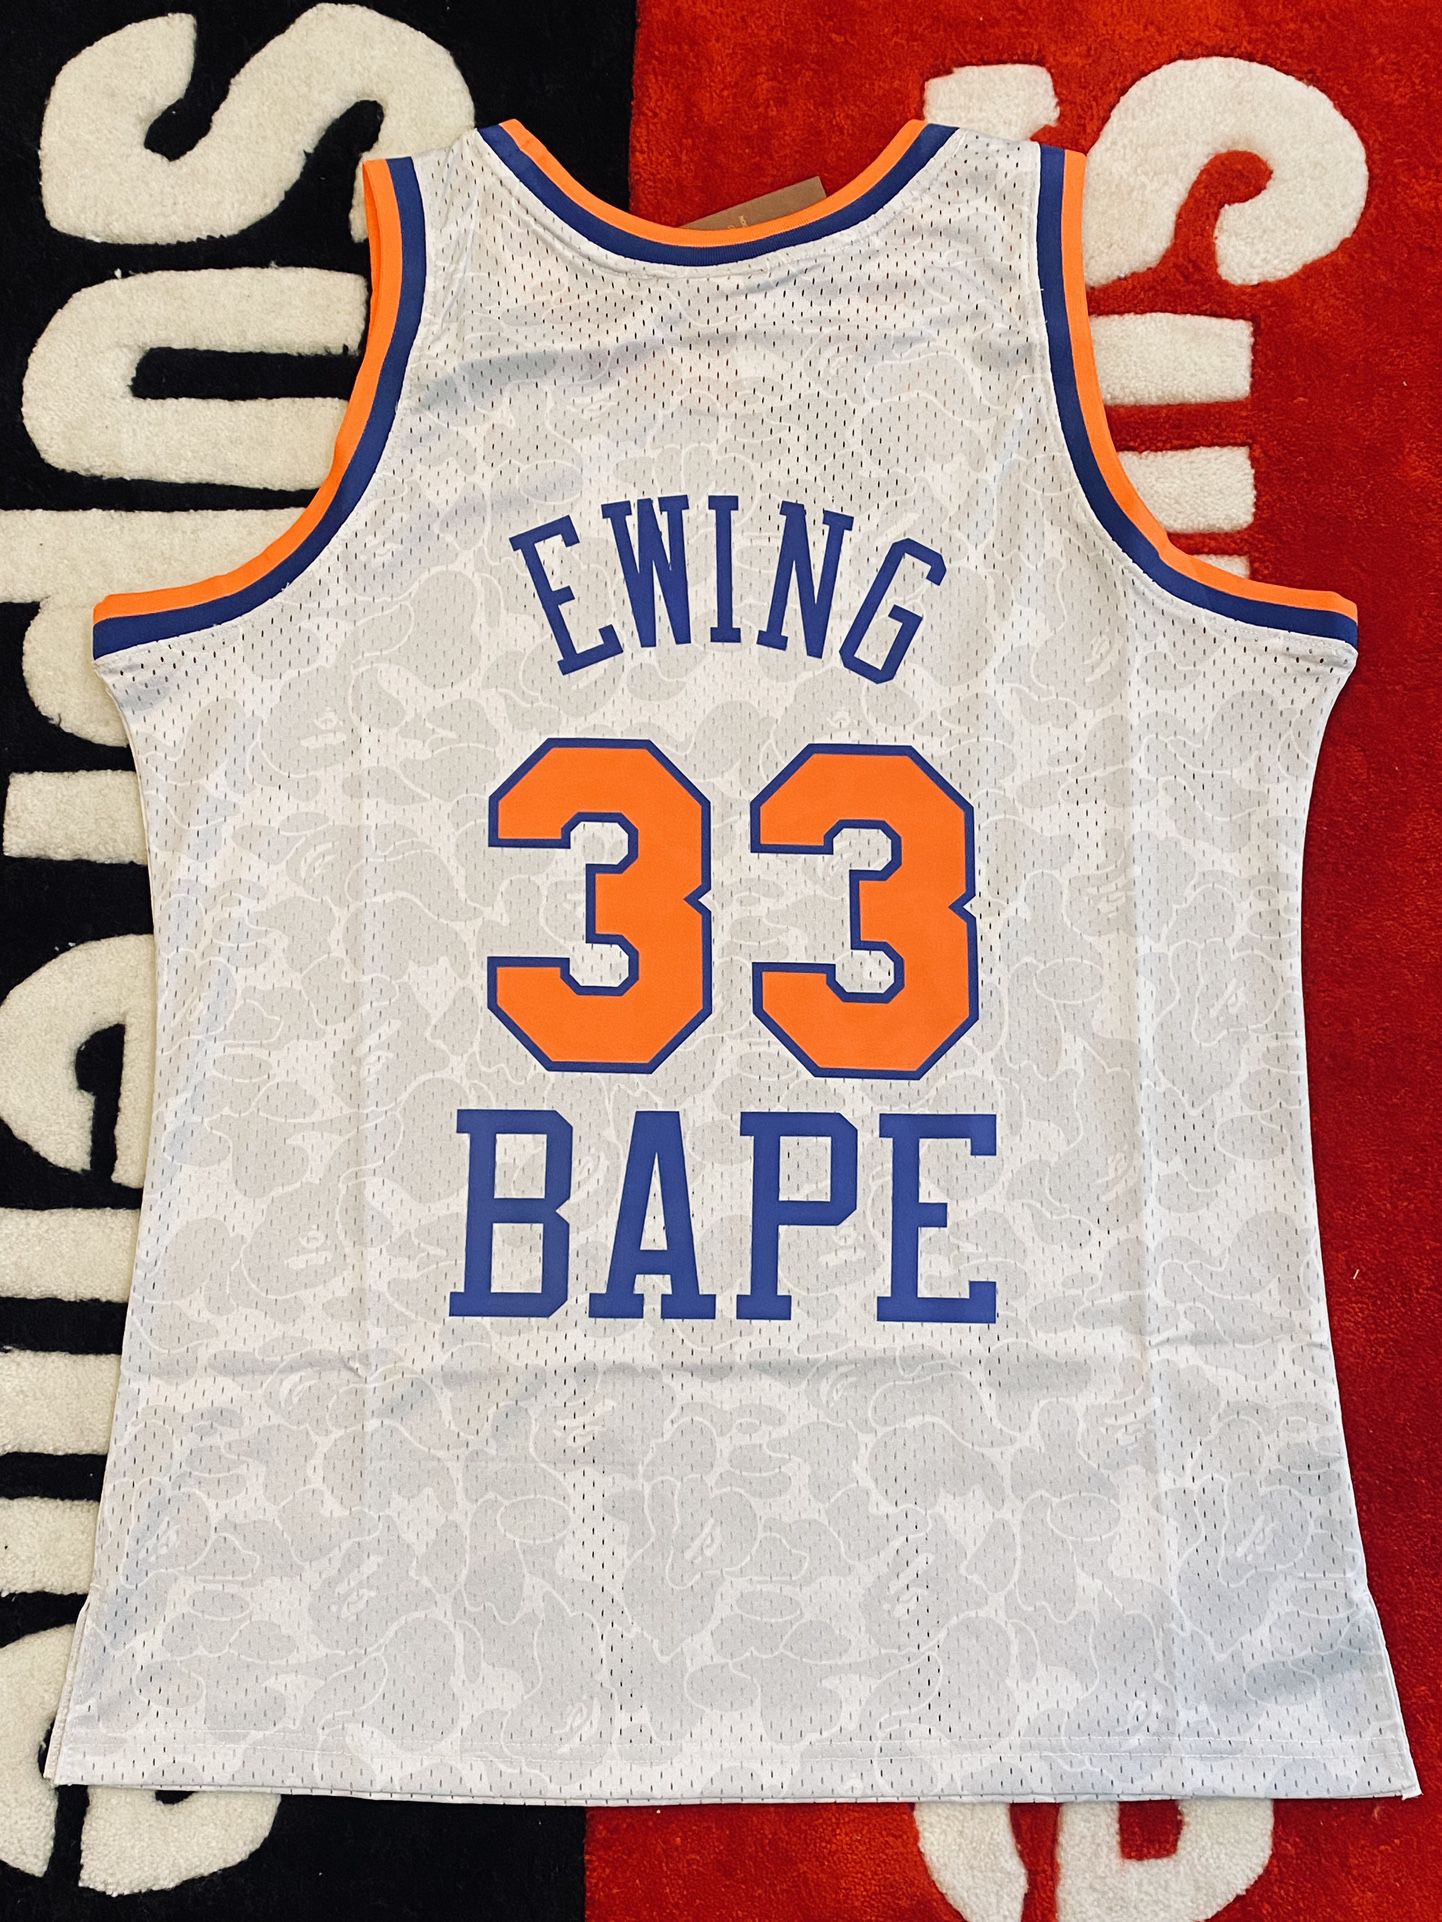 M&N Bape New York Knicks Jersey Patrick Ewing 1991-92 Camo Mitchell & Ness A Bathing Ape